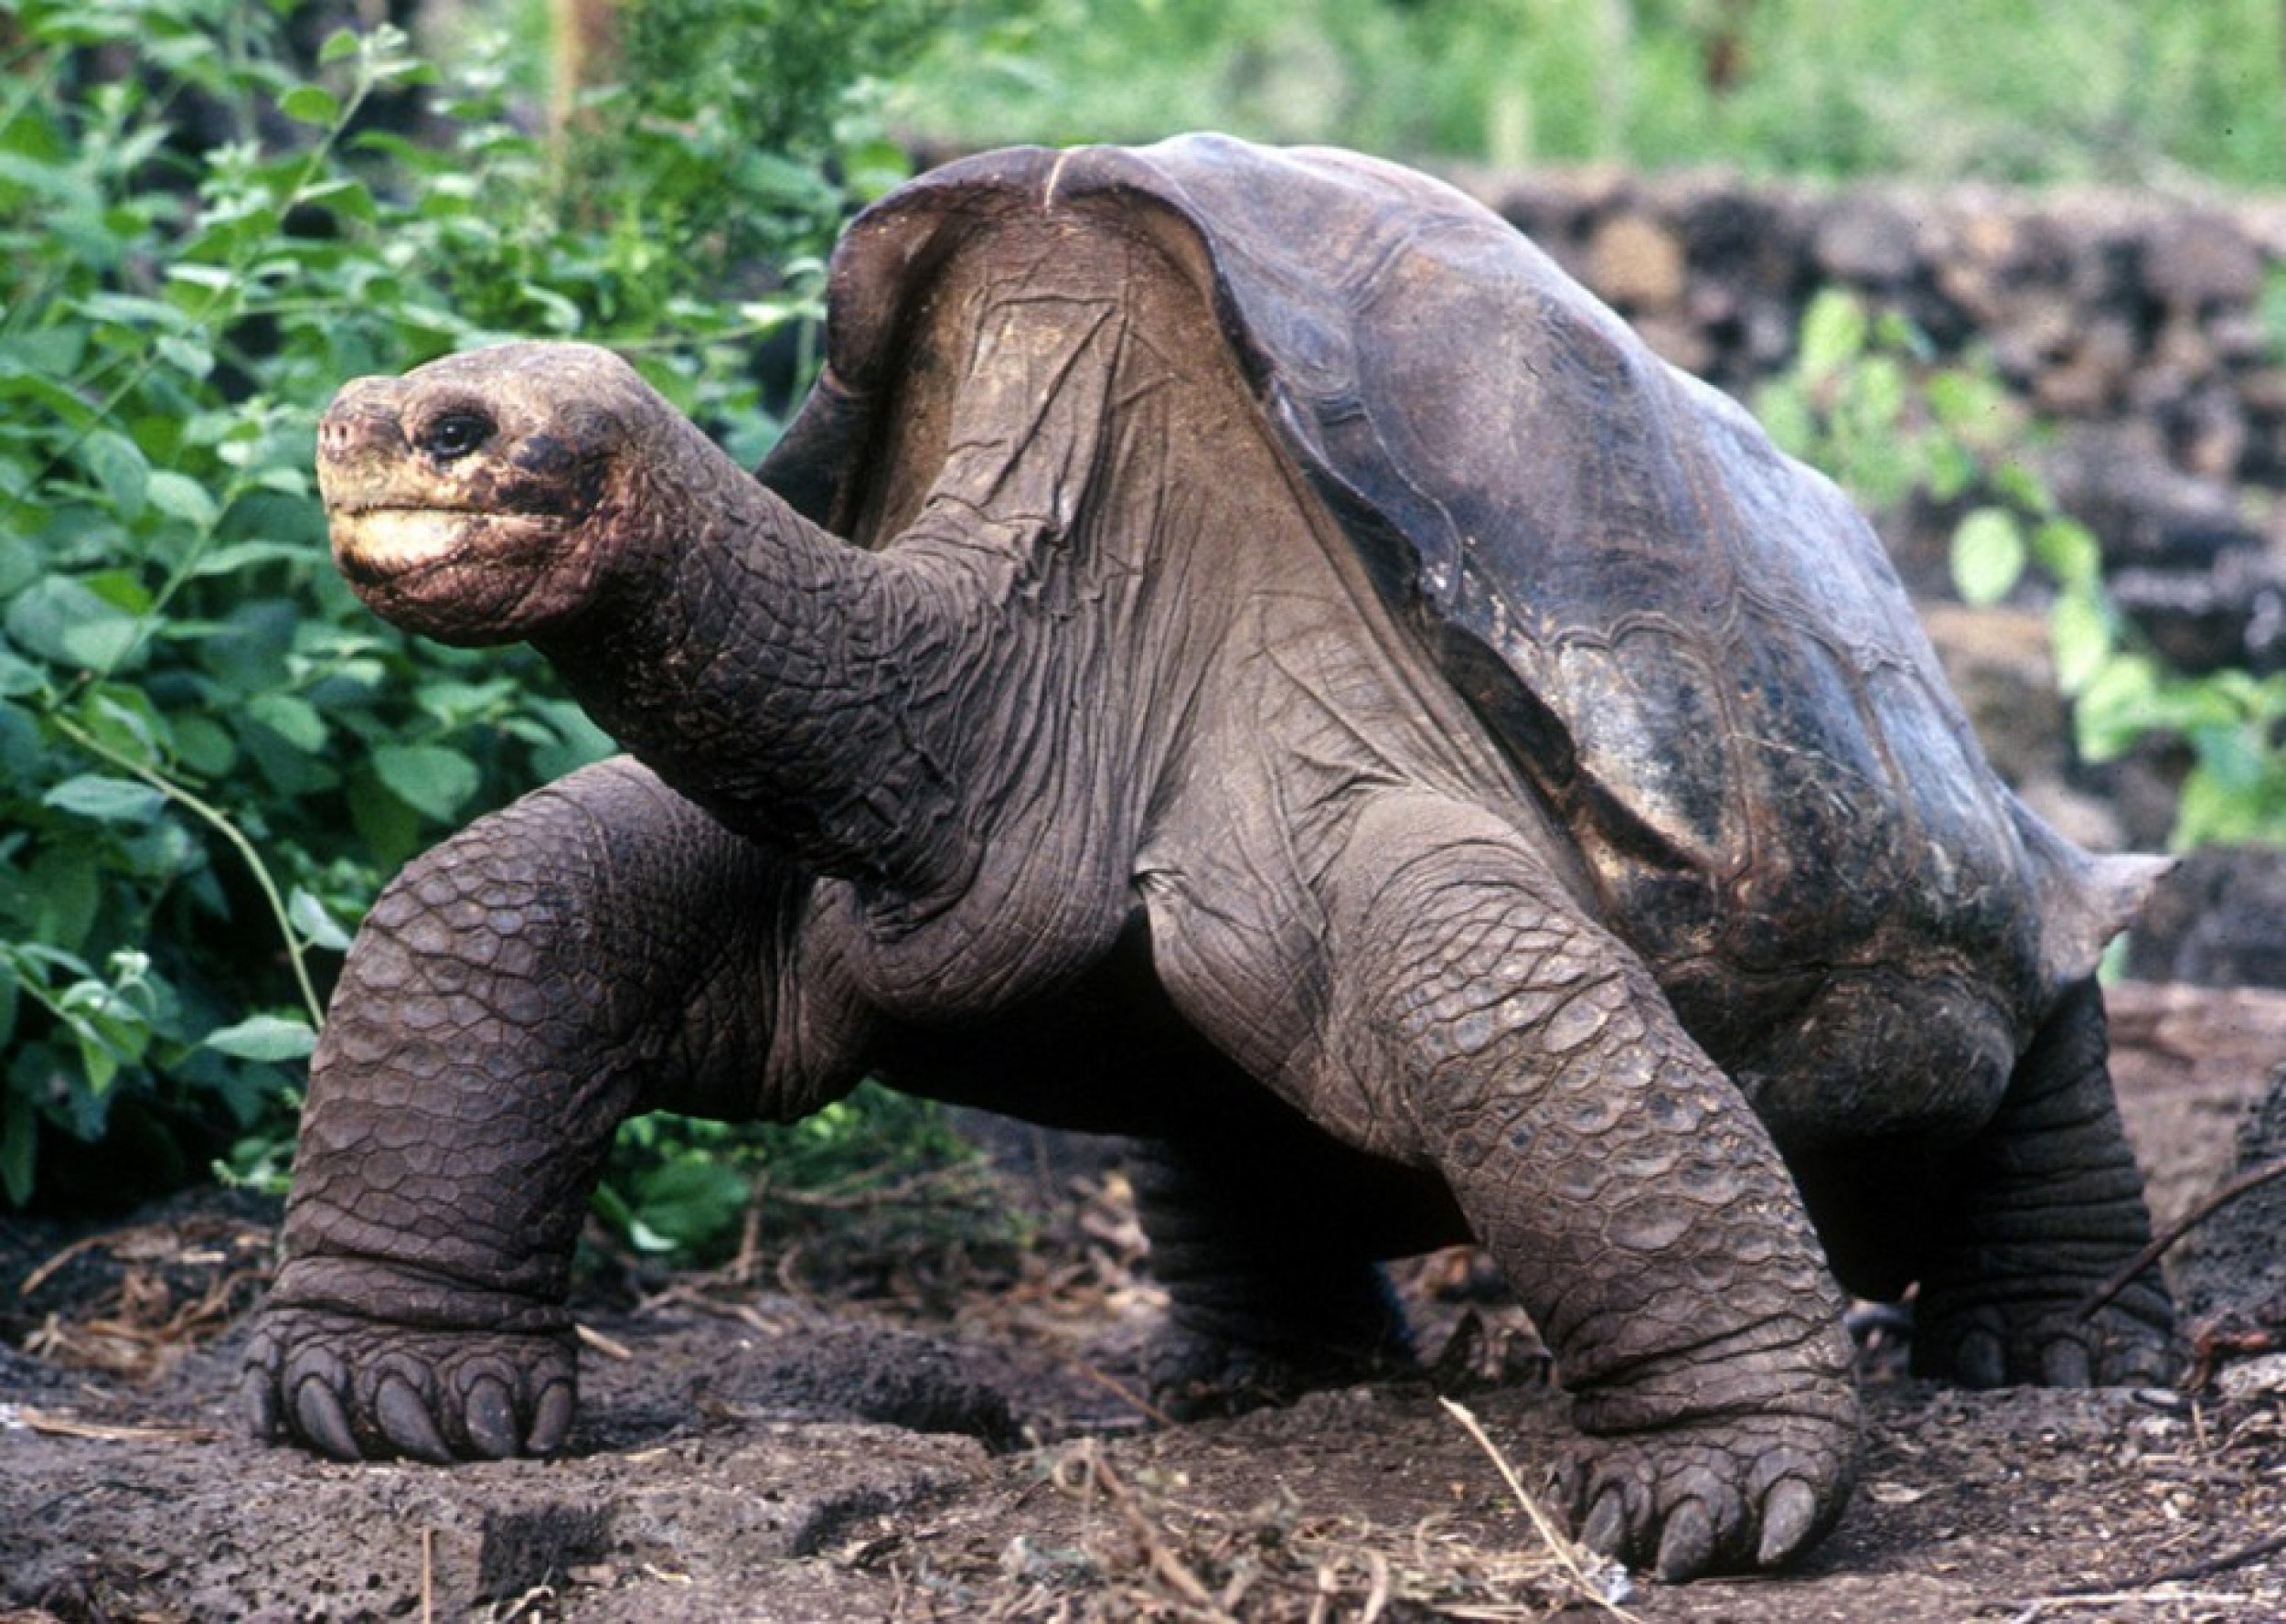 The lumbering giant Galapagos tortoise